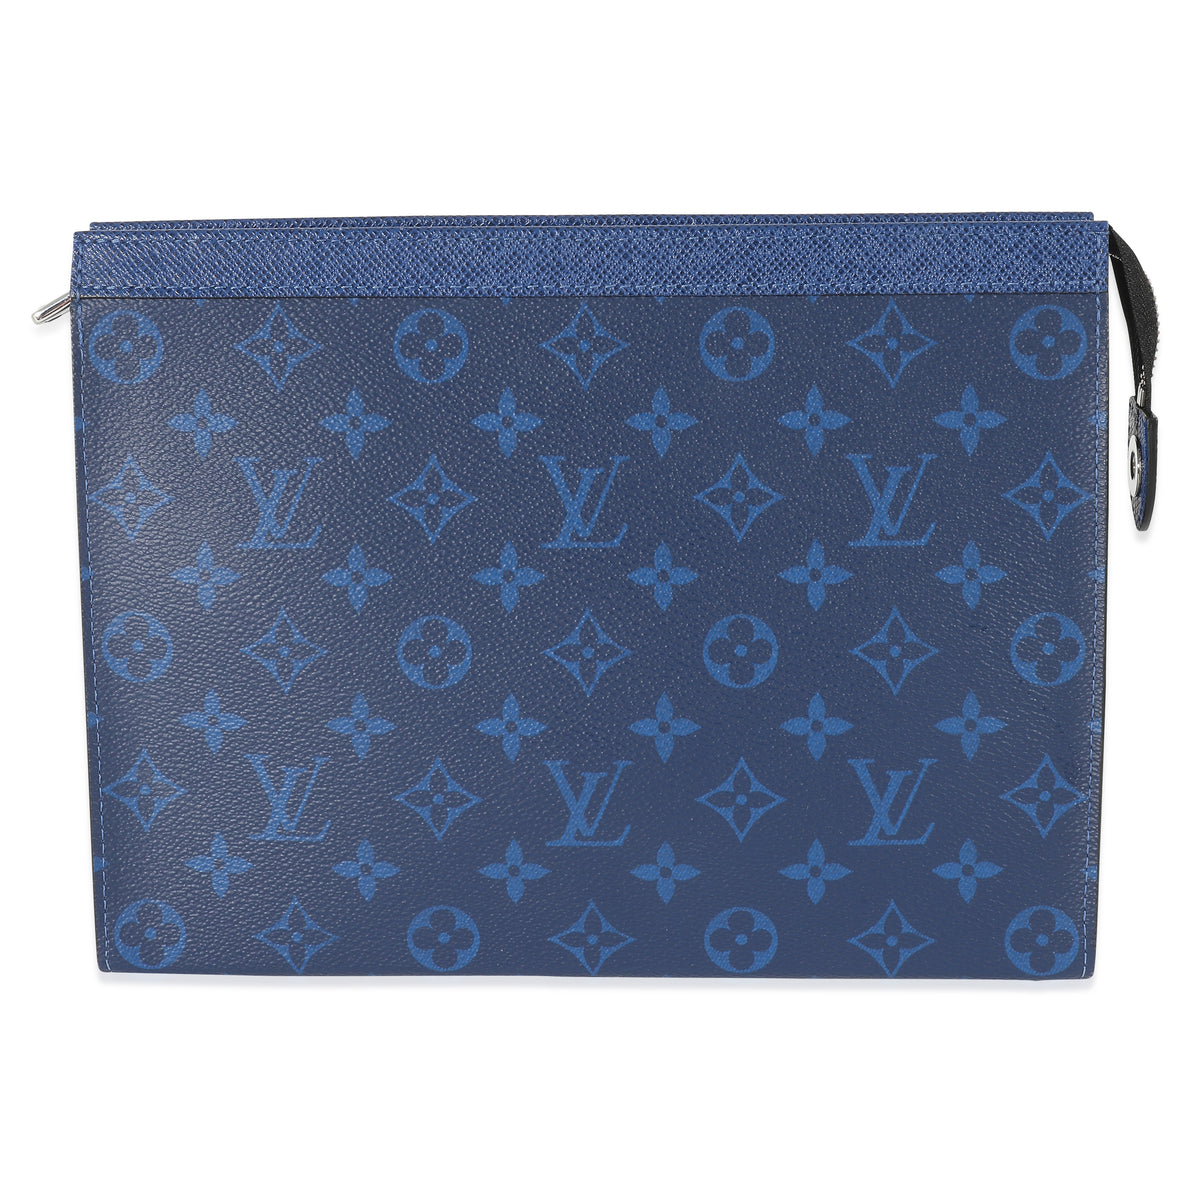 Louis Vuitton Blue Monogram Taigarama Pochette Voyage MM Louis Vuitton